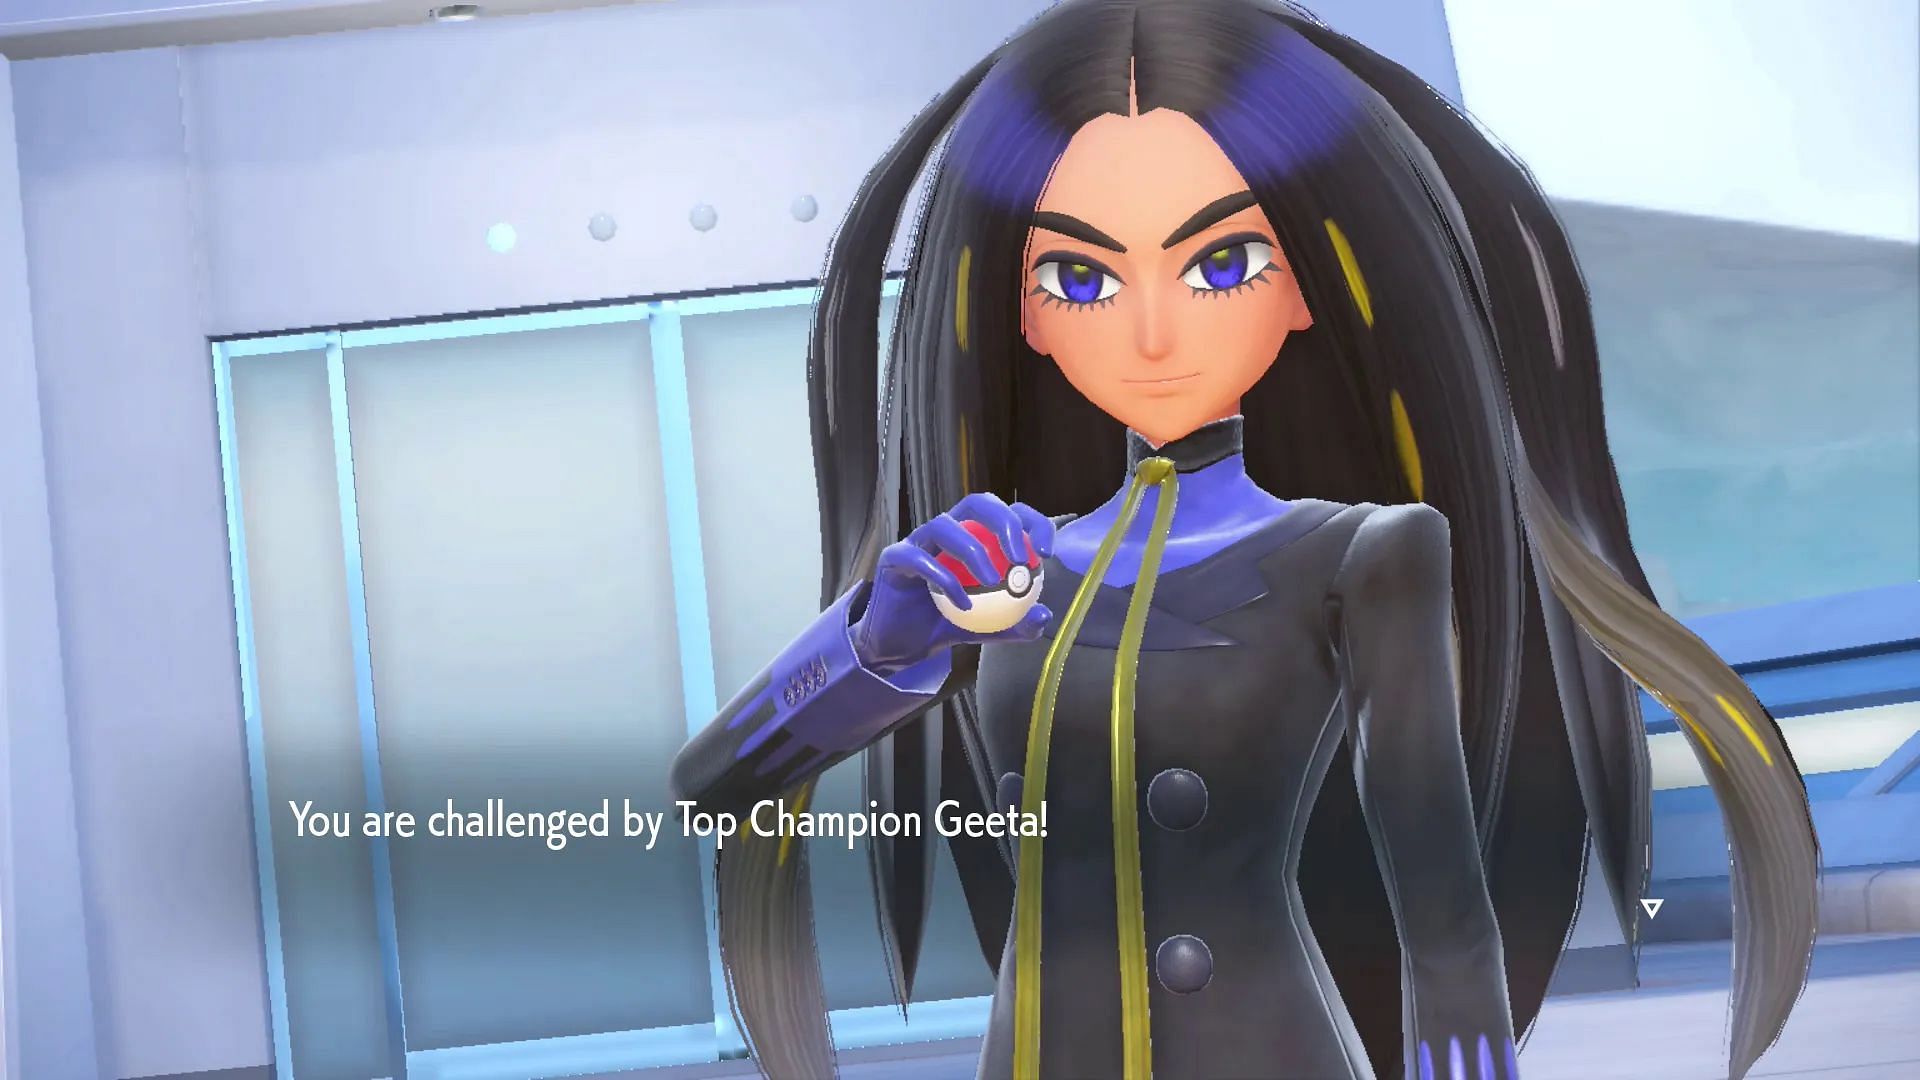 Champion Geeta (Image via The Pokemon Company)